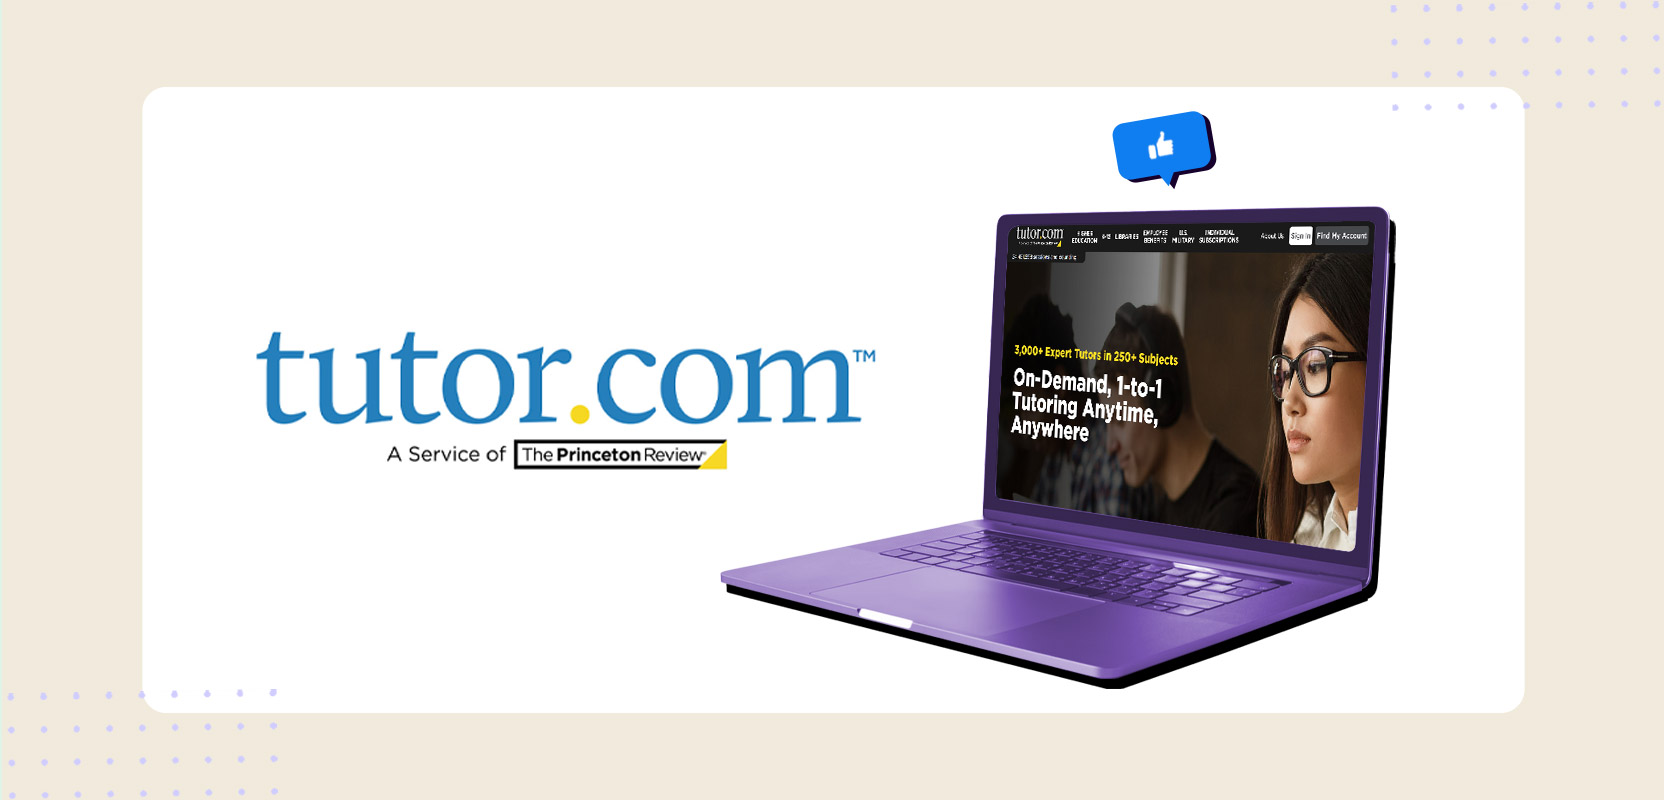 Laptop showing Tutor.com website